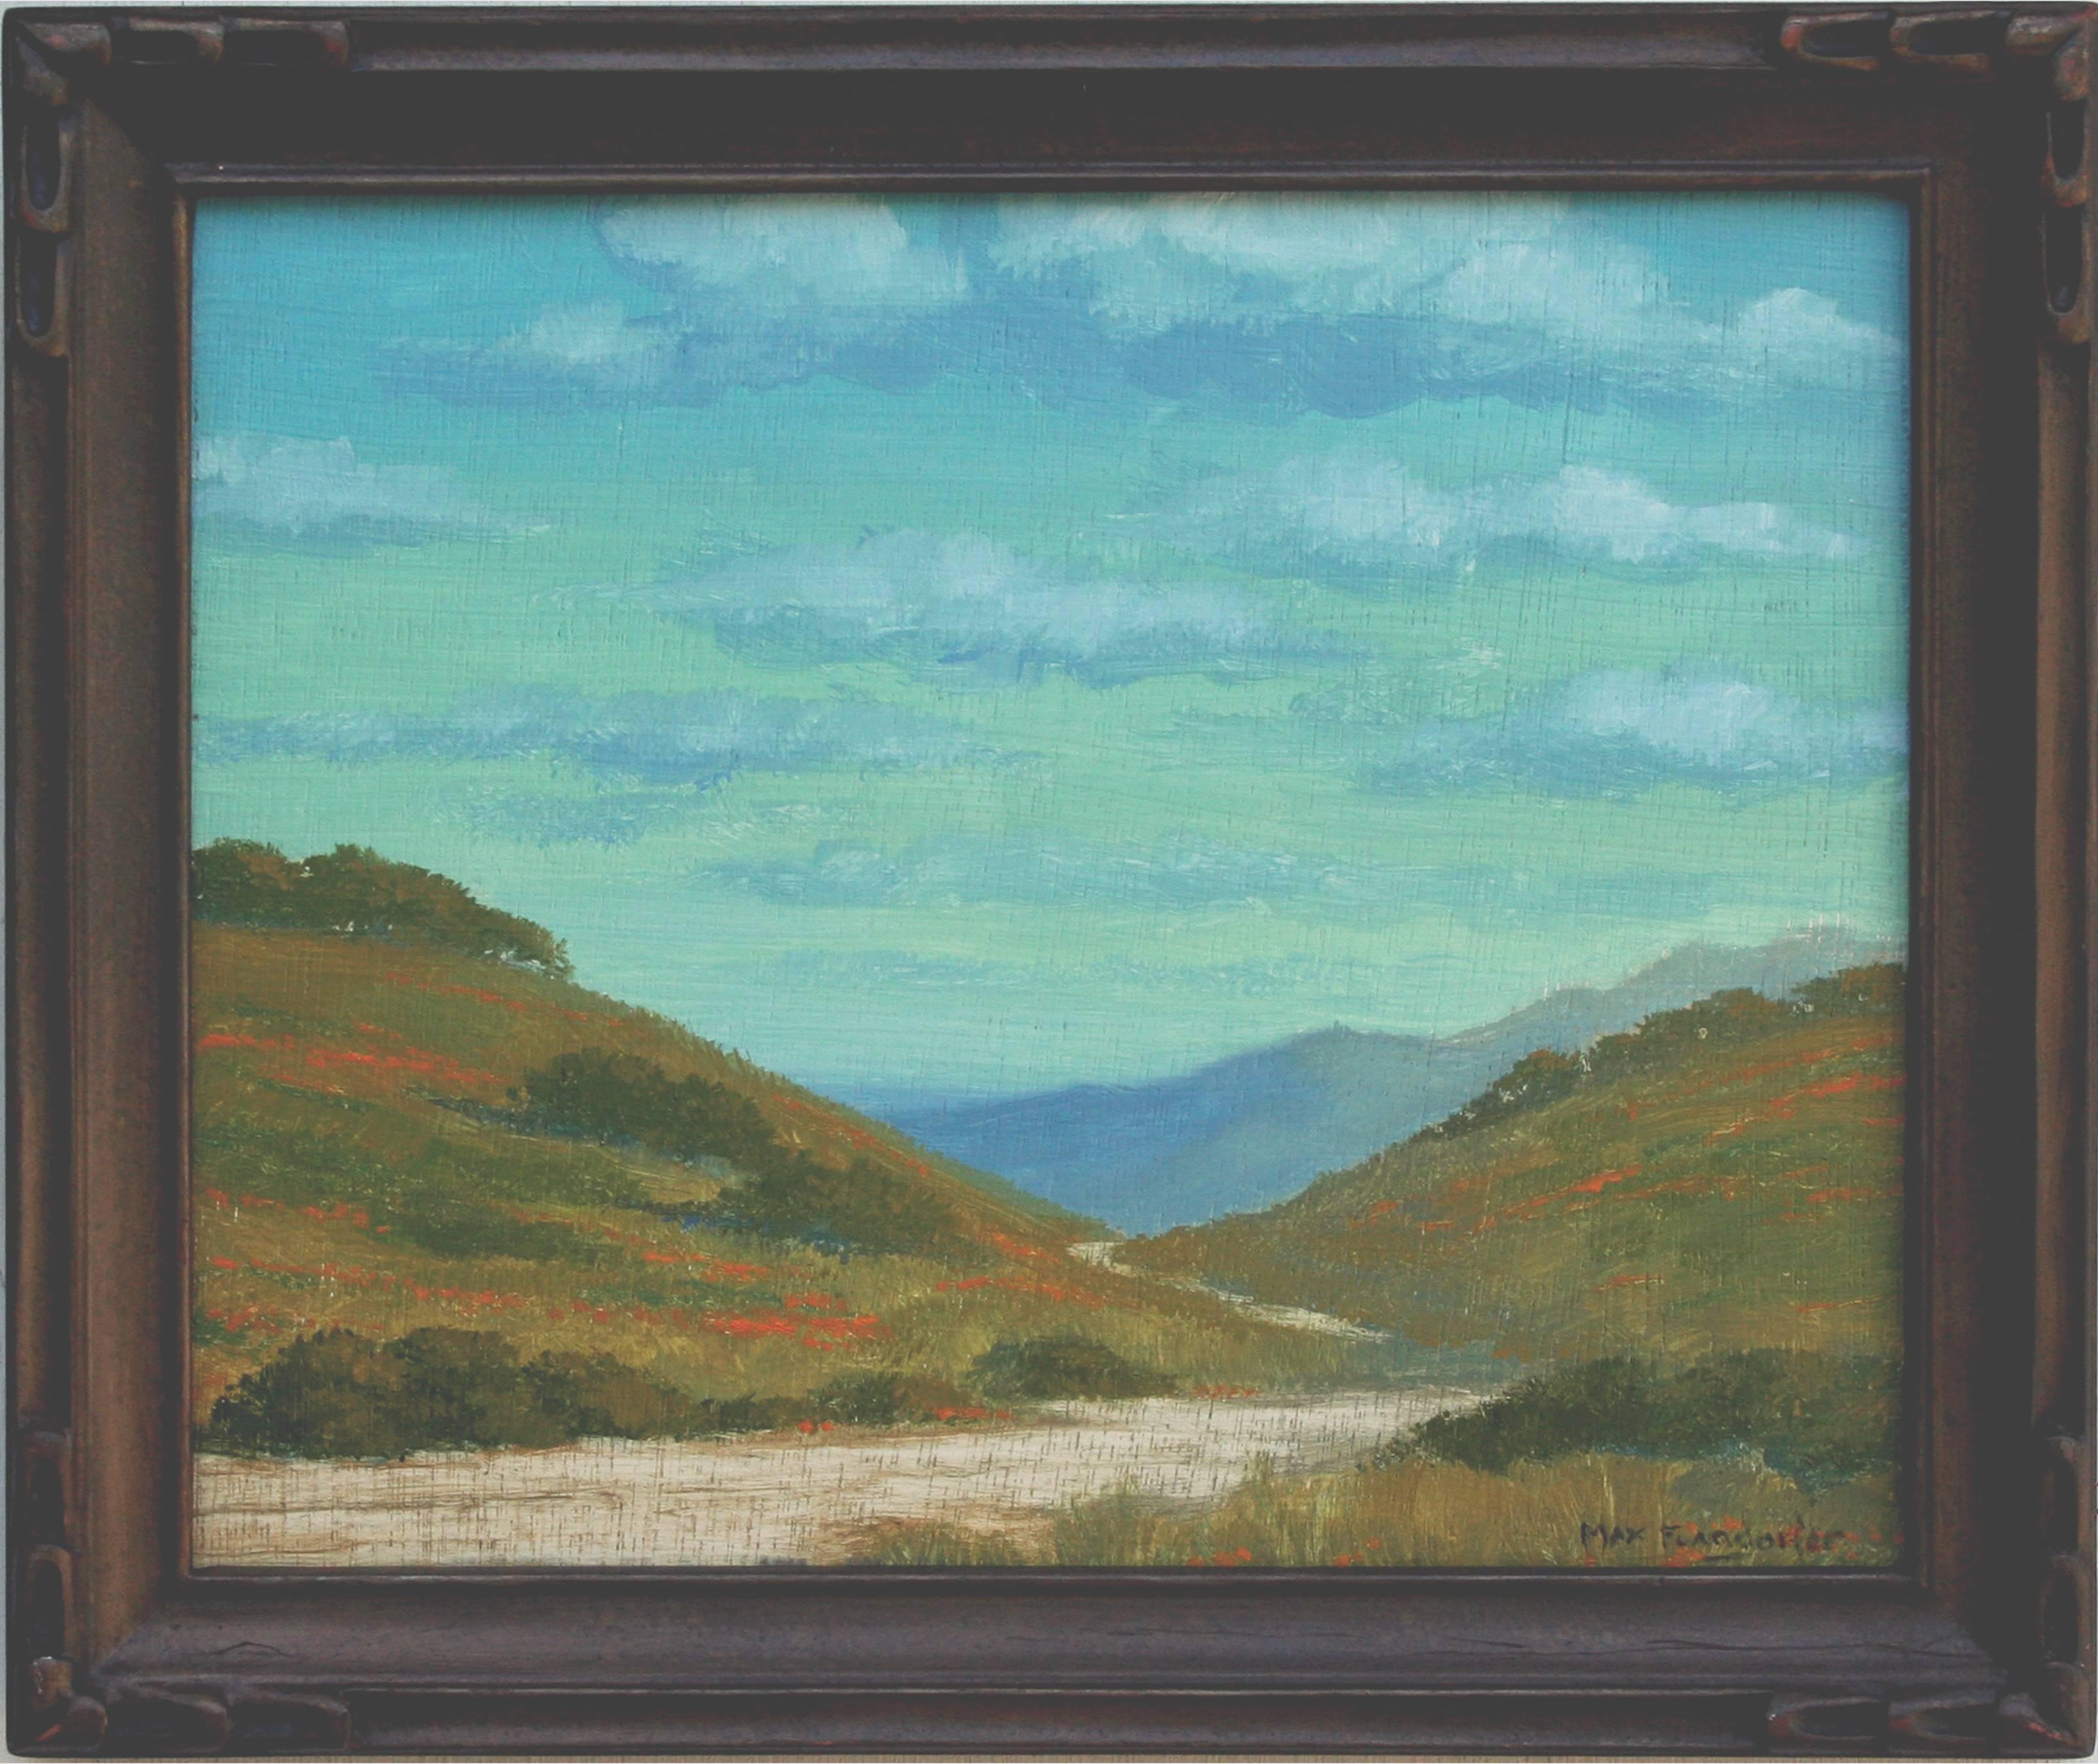 Max Flandorfer Landscape Painting - Plein Air California Hills Landscape "All My Days"